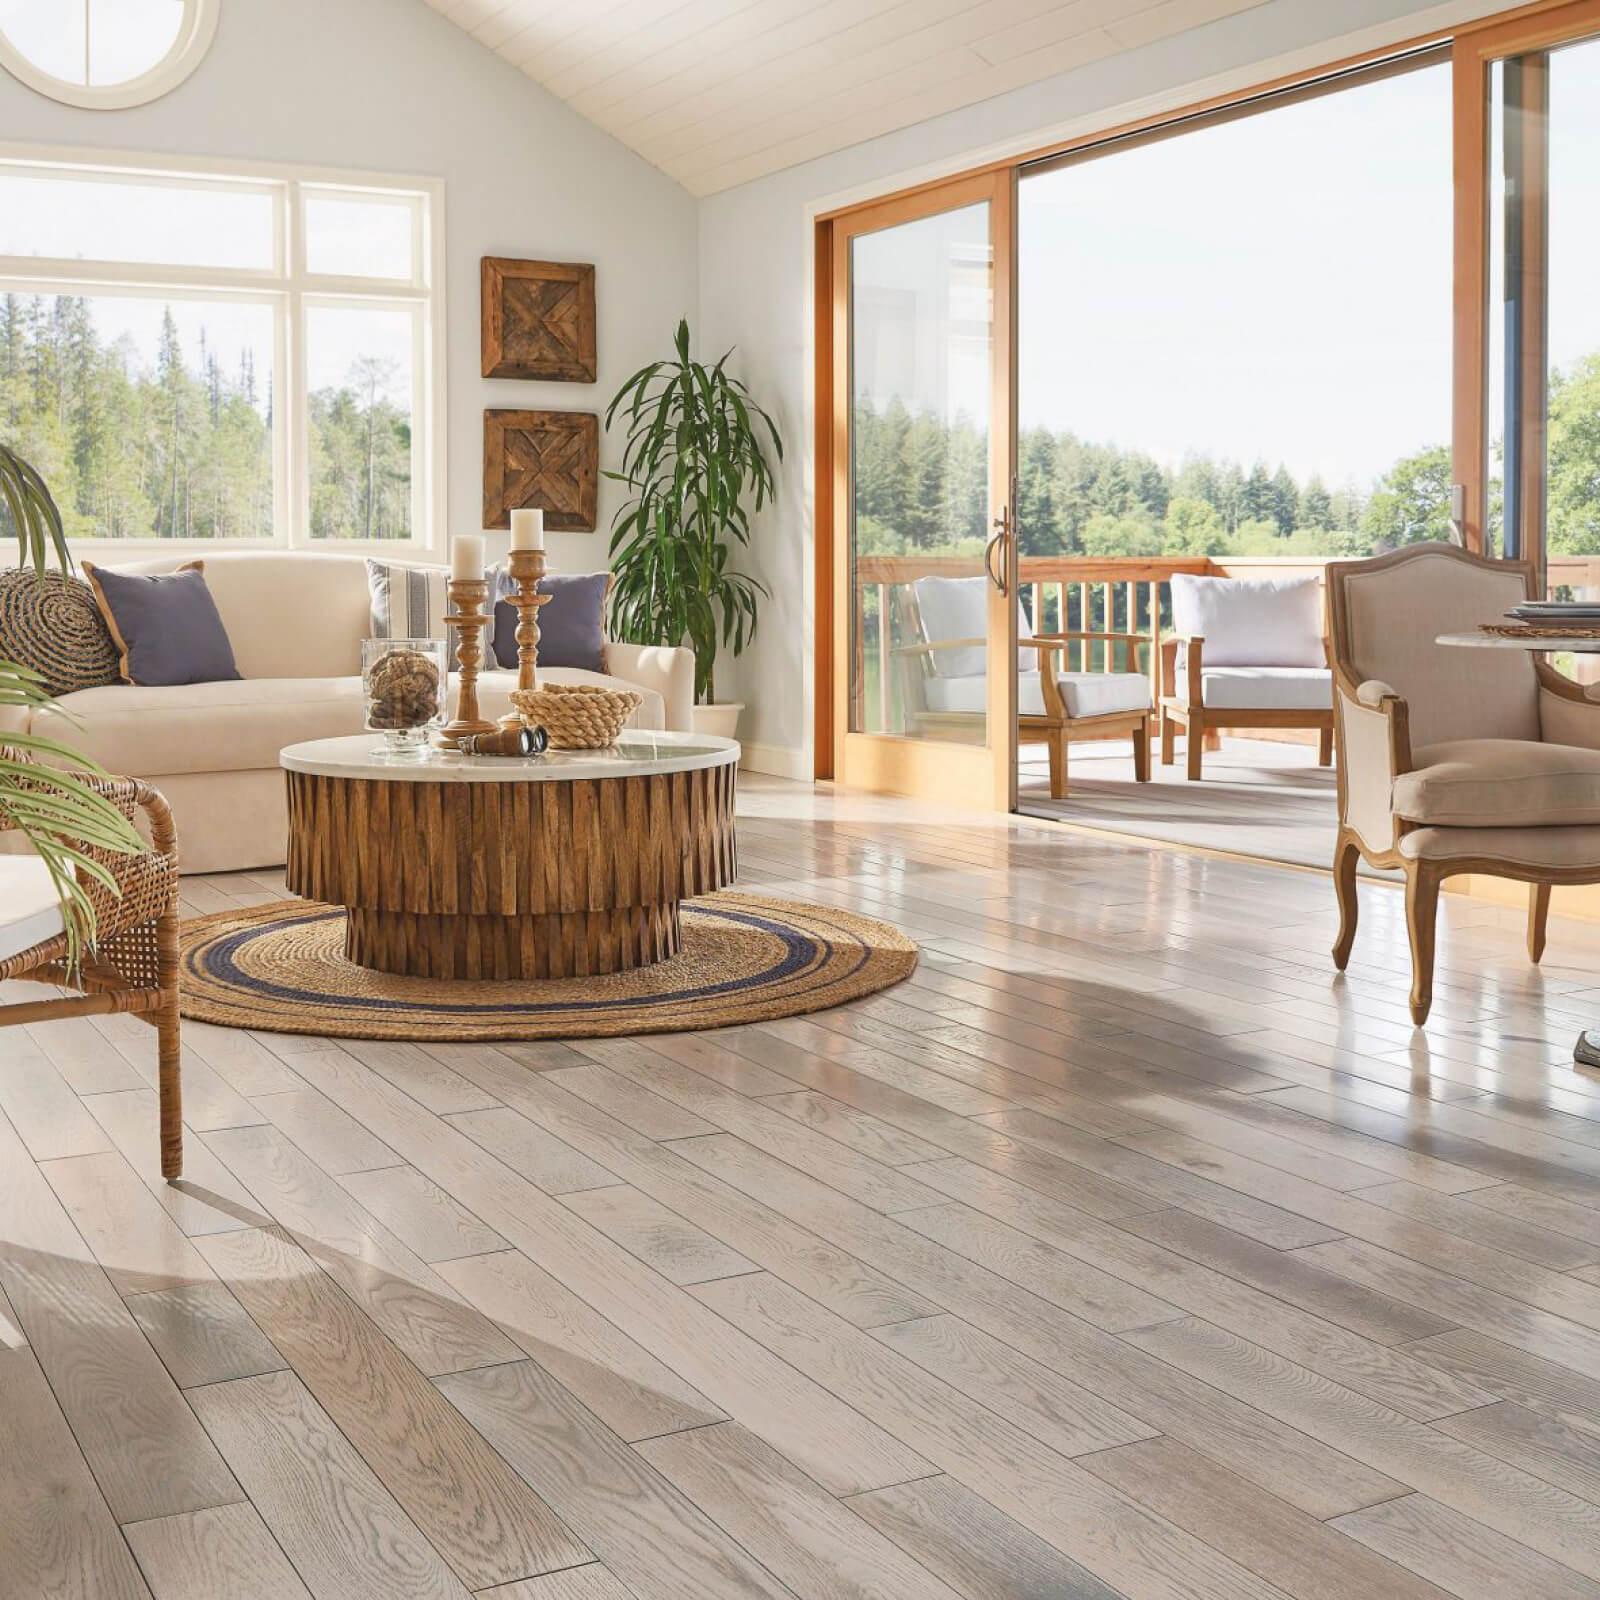 Hardwood flooring in a living room | Flooring Direct